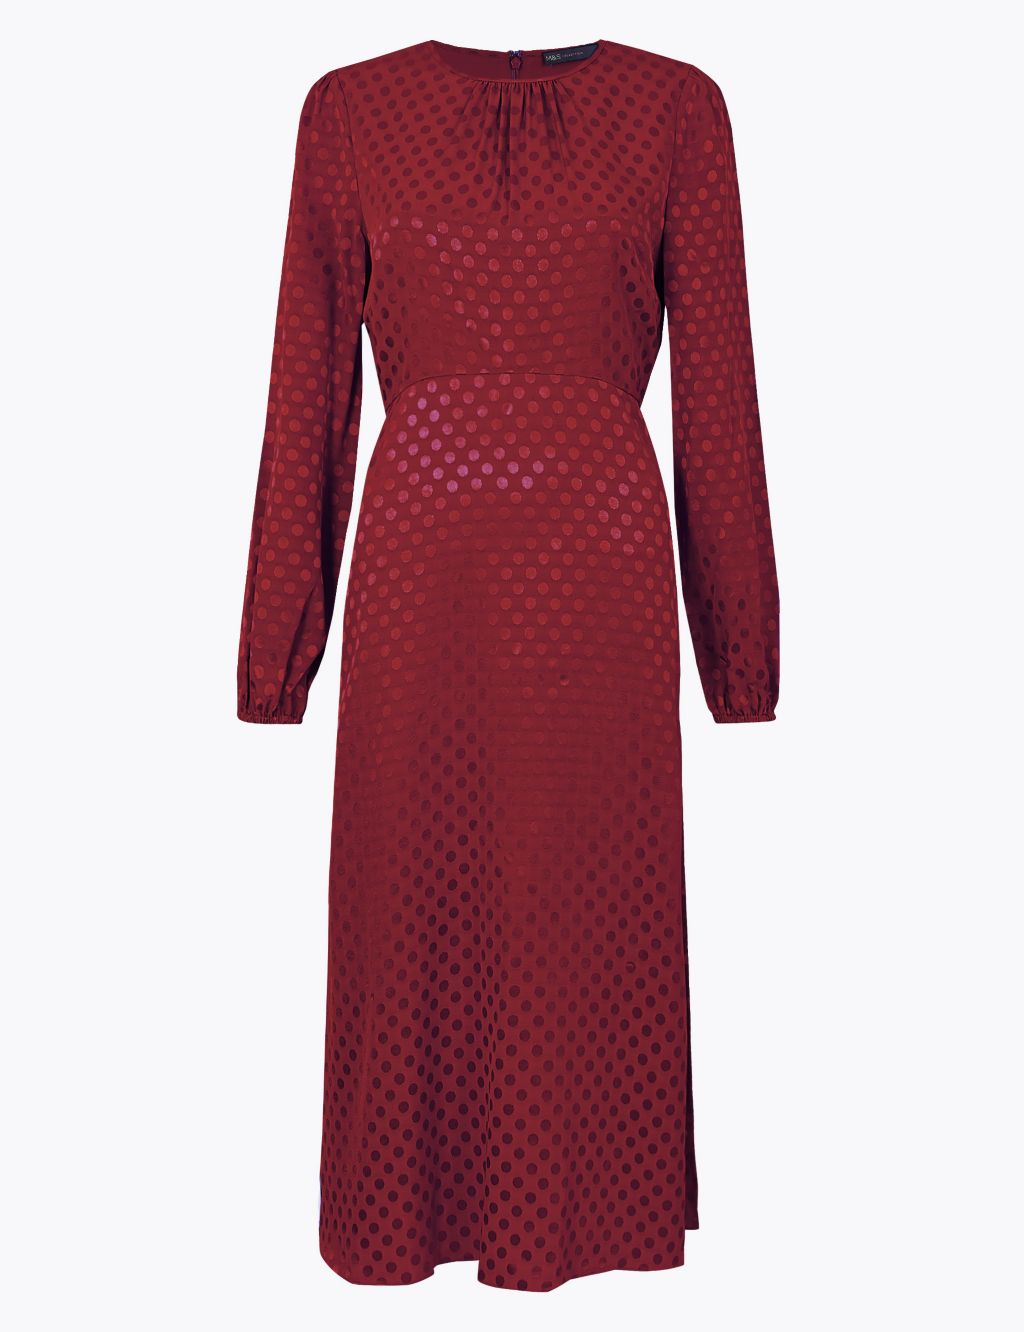 Jacquard Spot Fit & Flare Midi Dress | M&S Collection | M&S